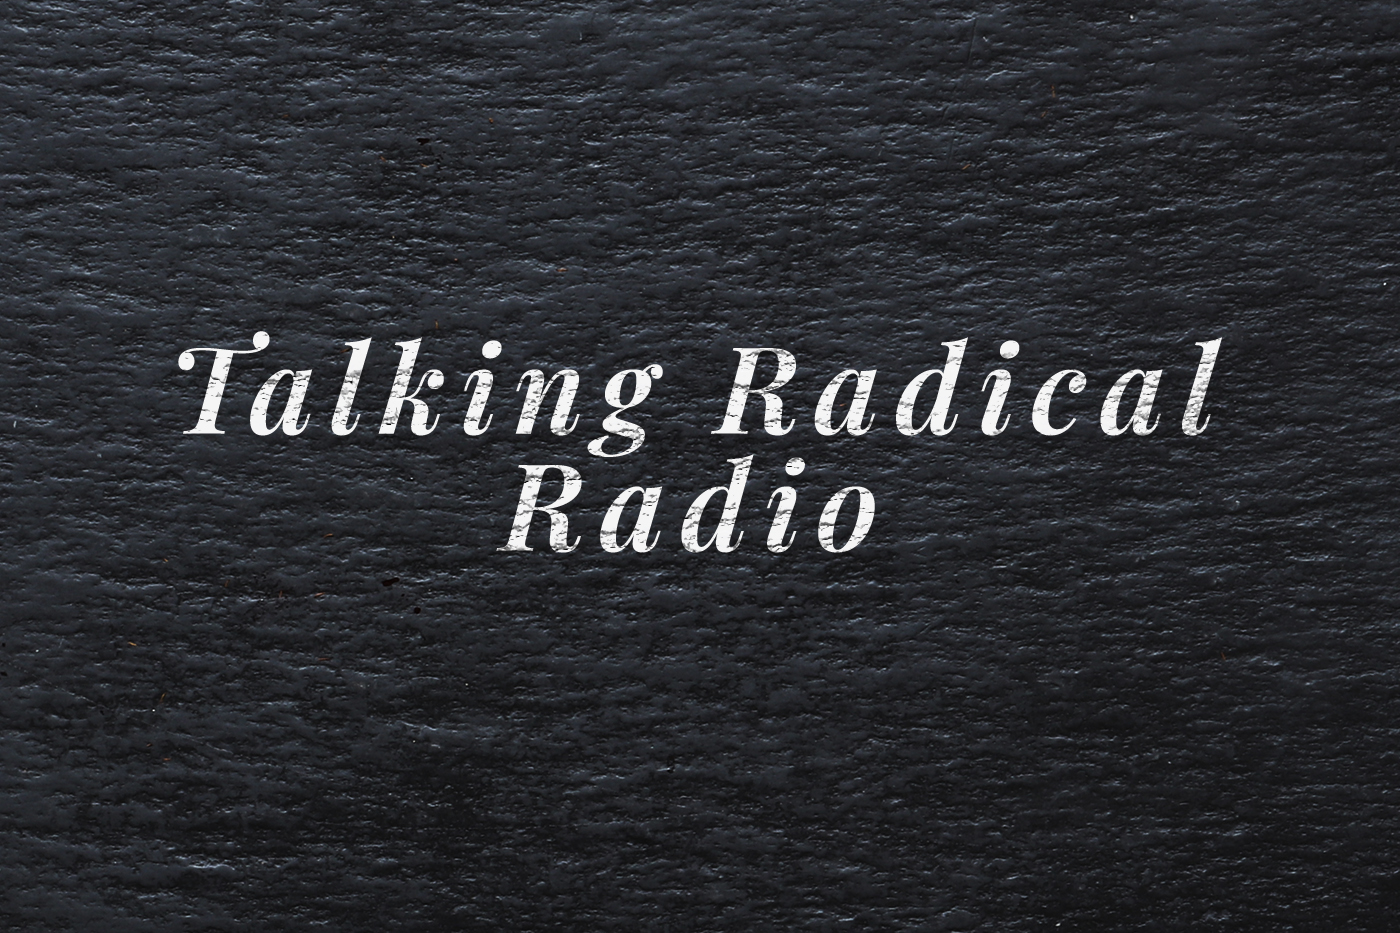 Talking Radical Radio